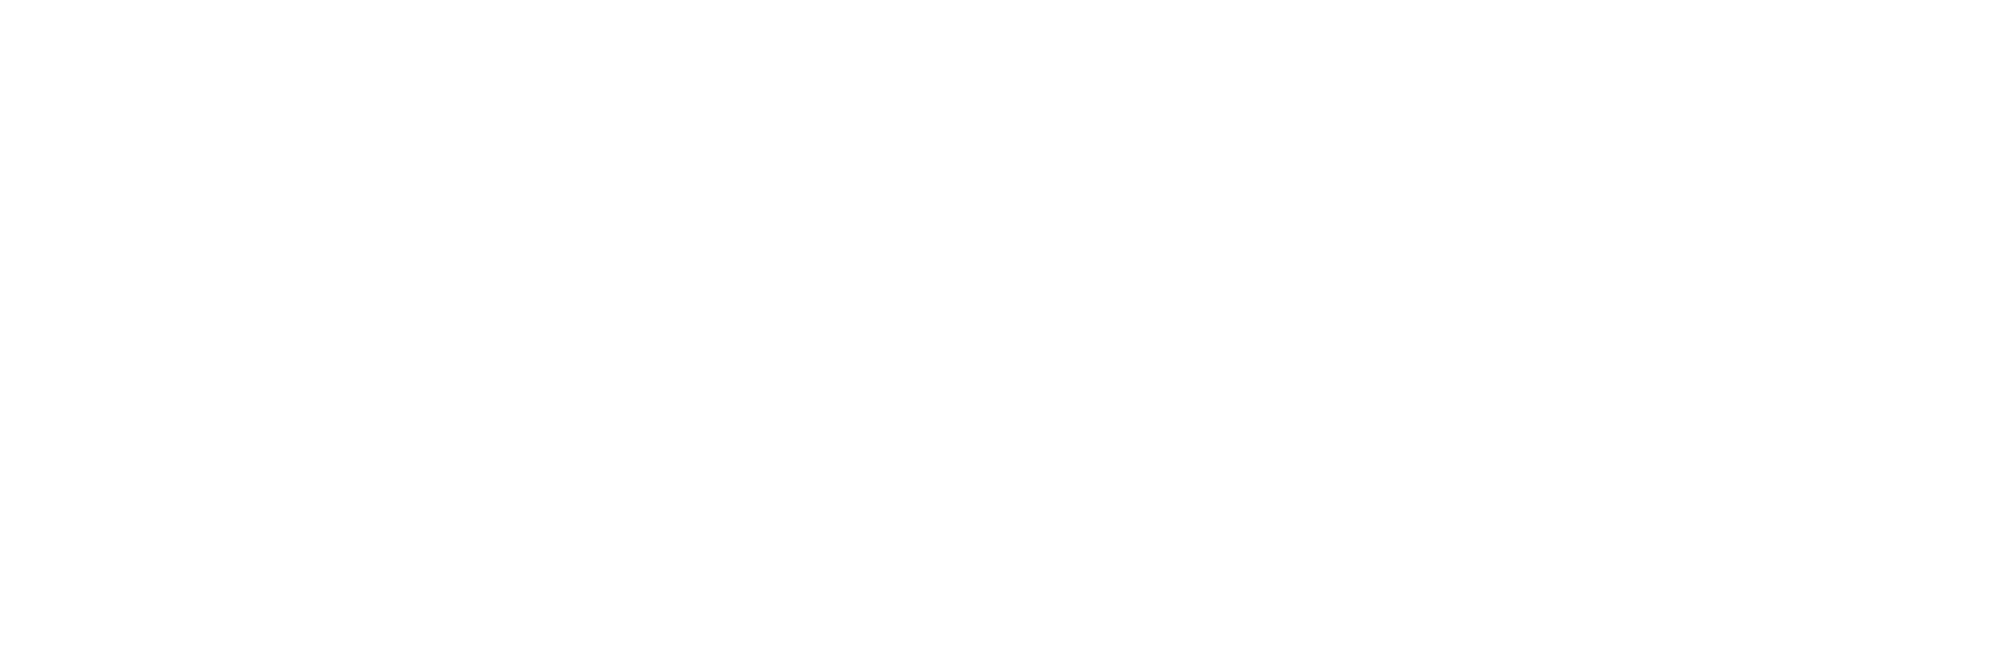 ALPINE logo - white